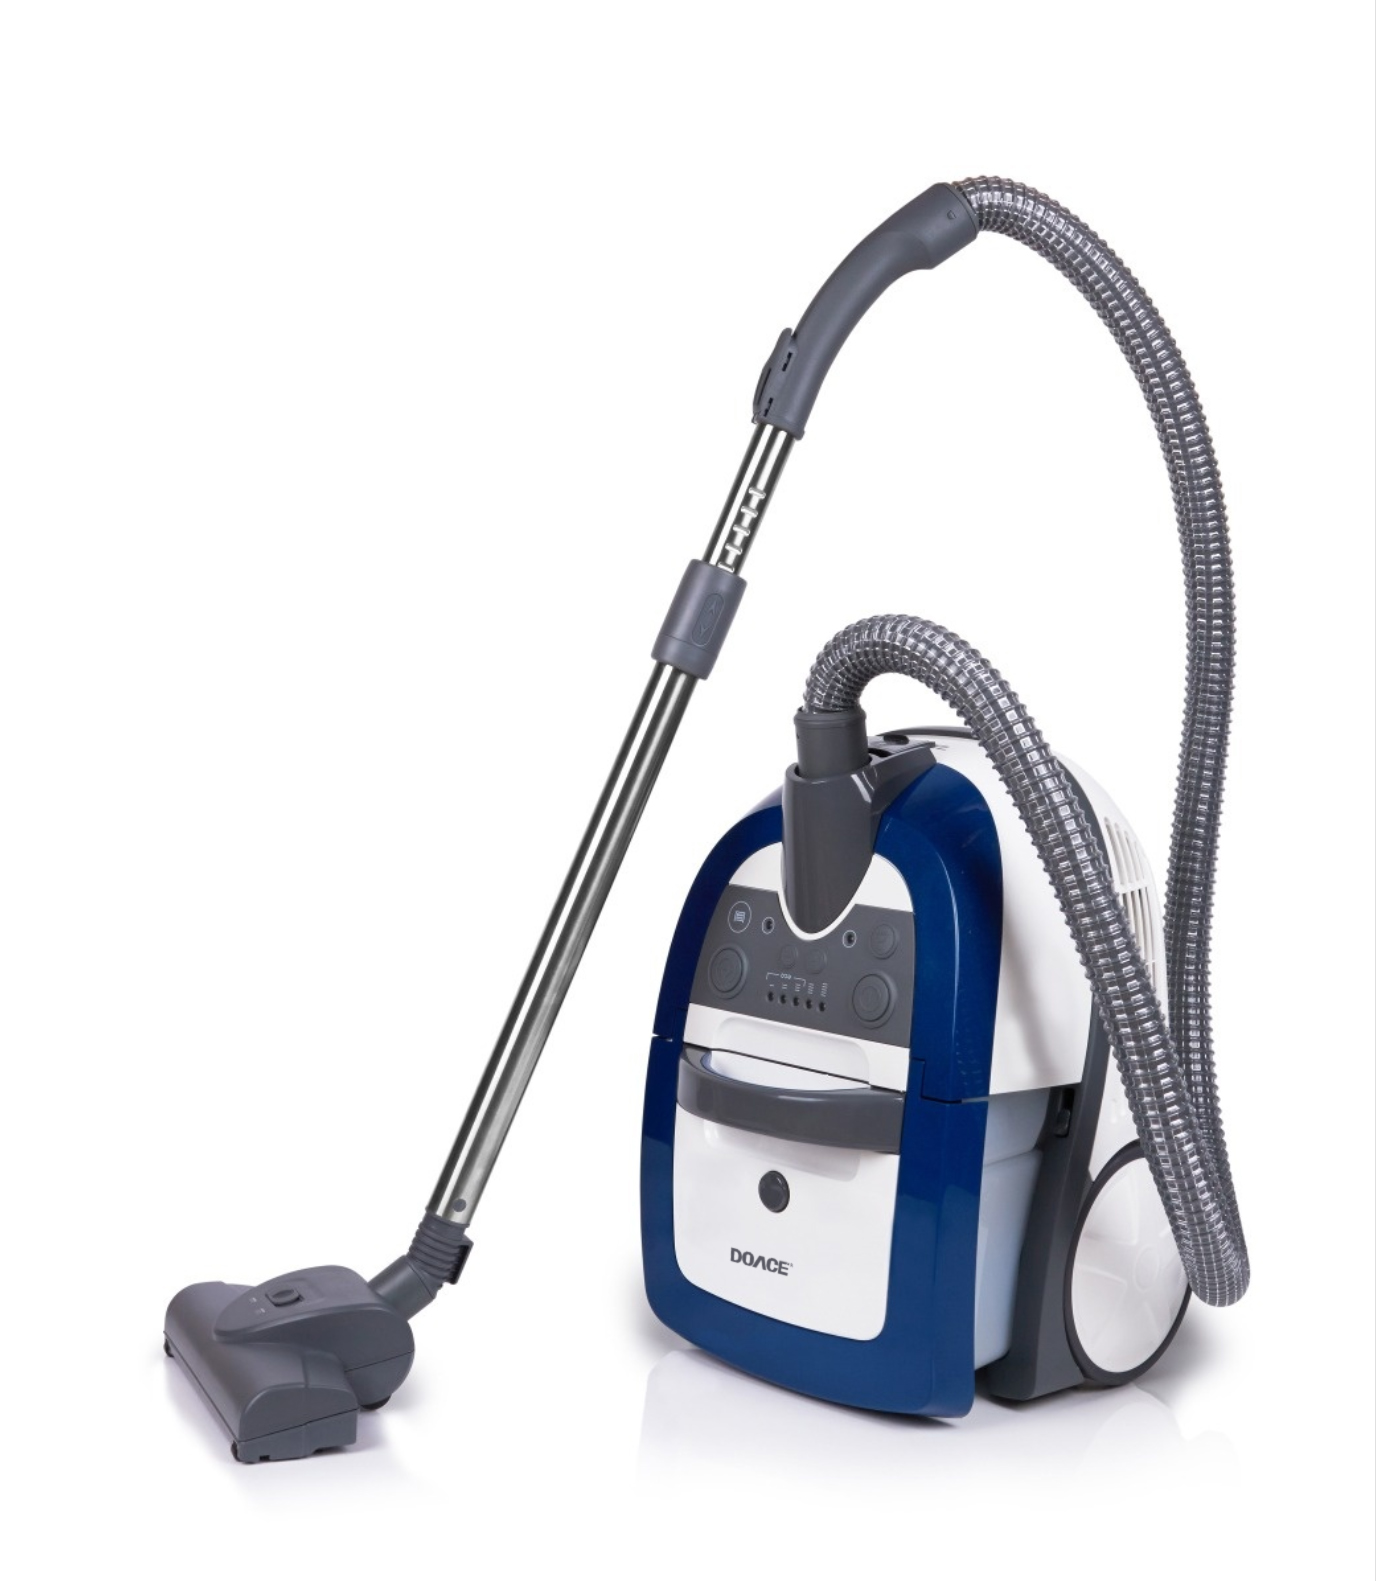 DOACE Mini Handheld Vacuum Cleaner, w/Filter